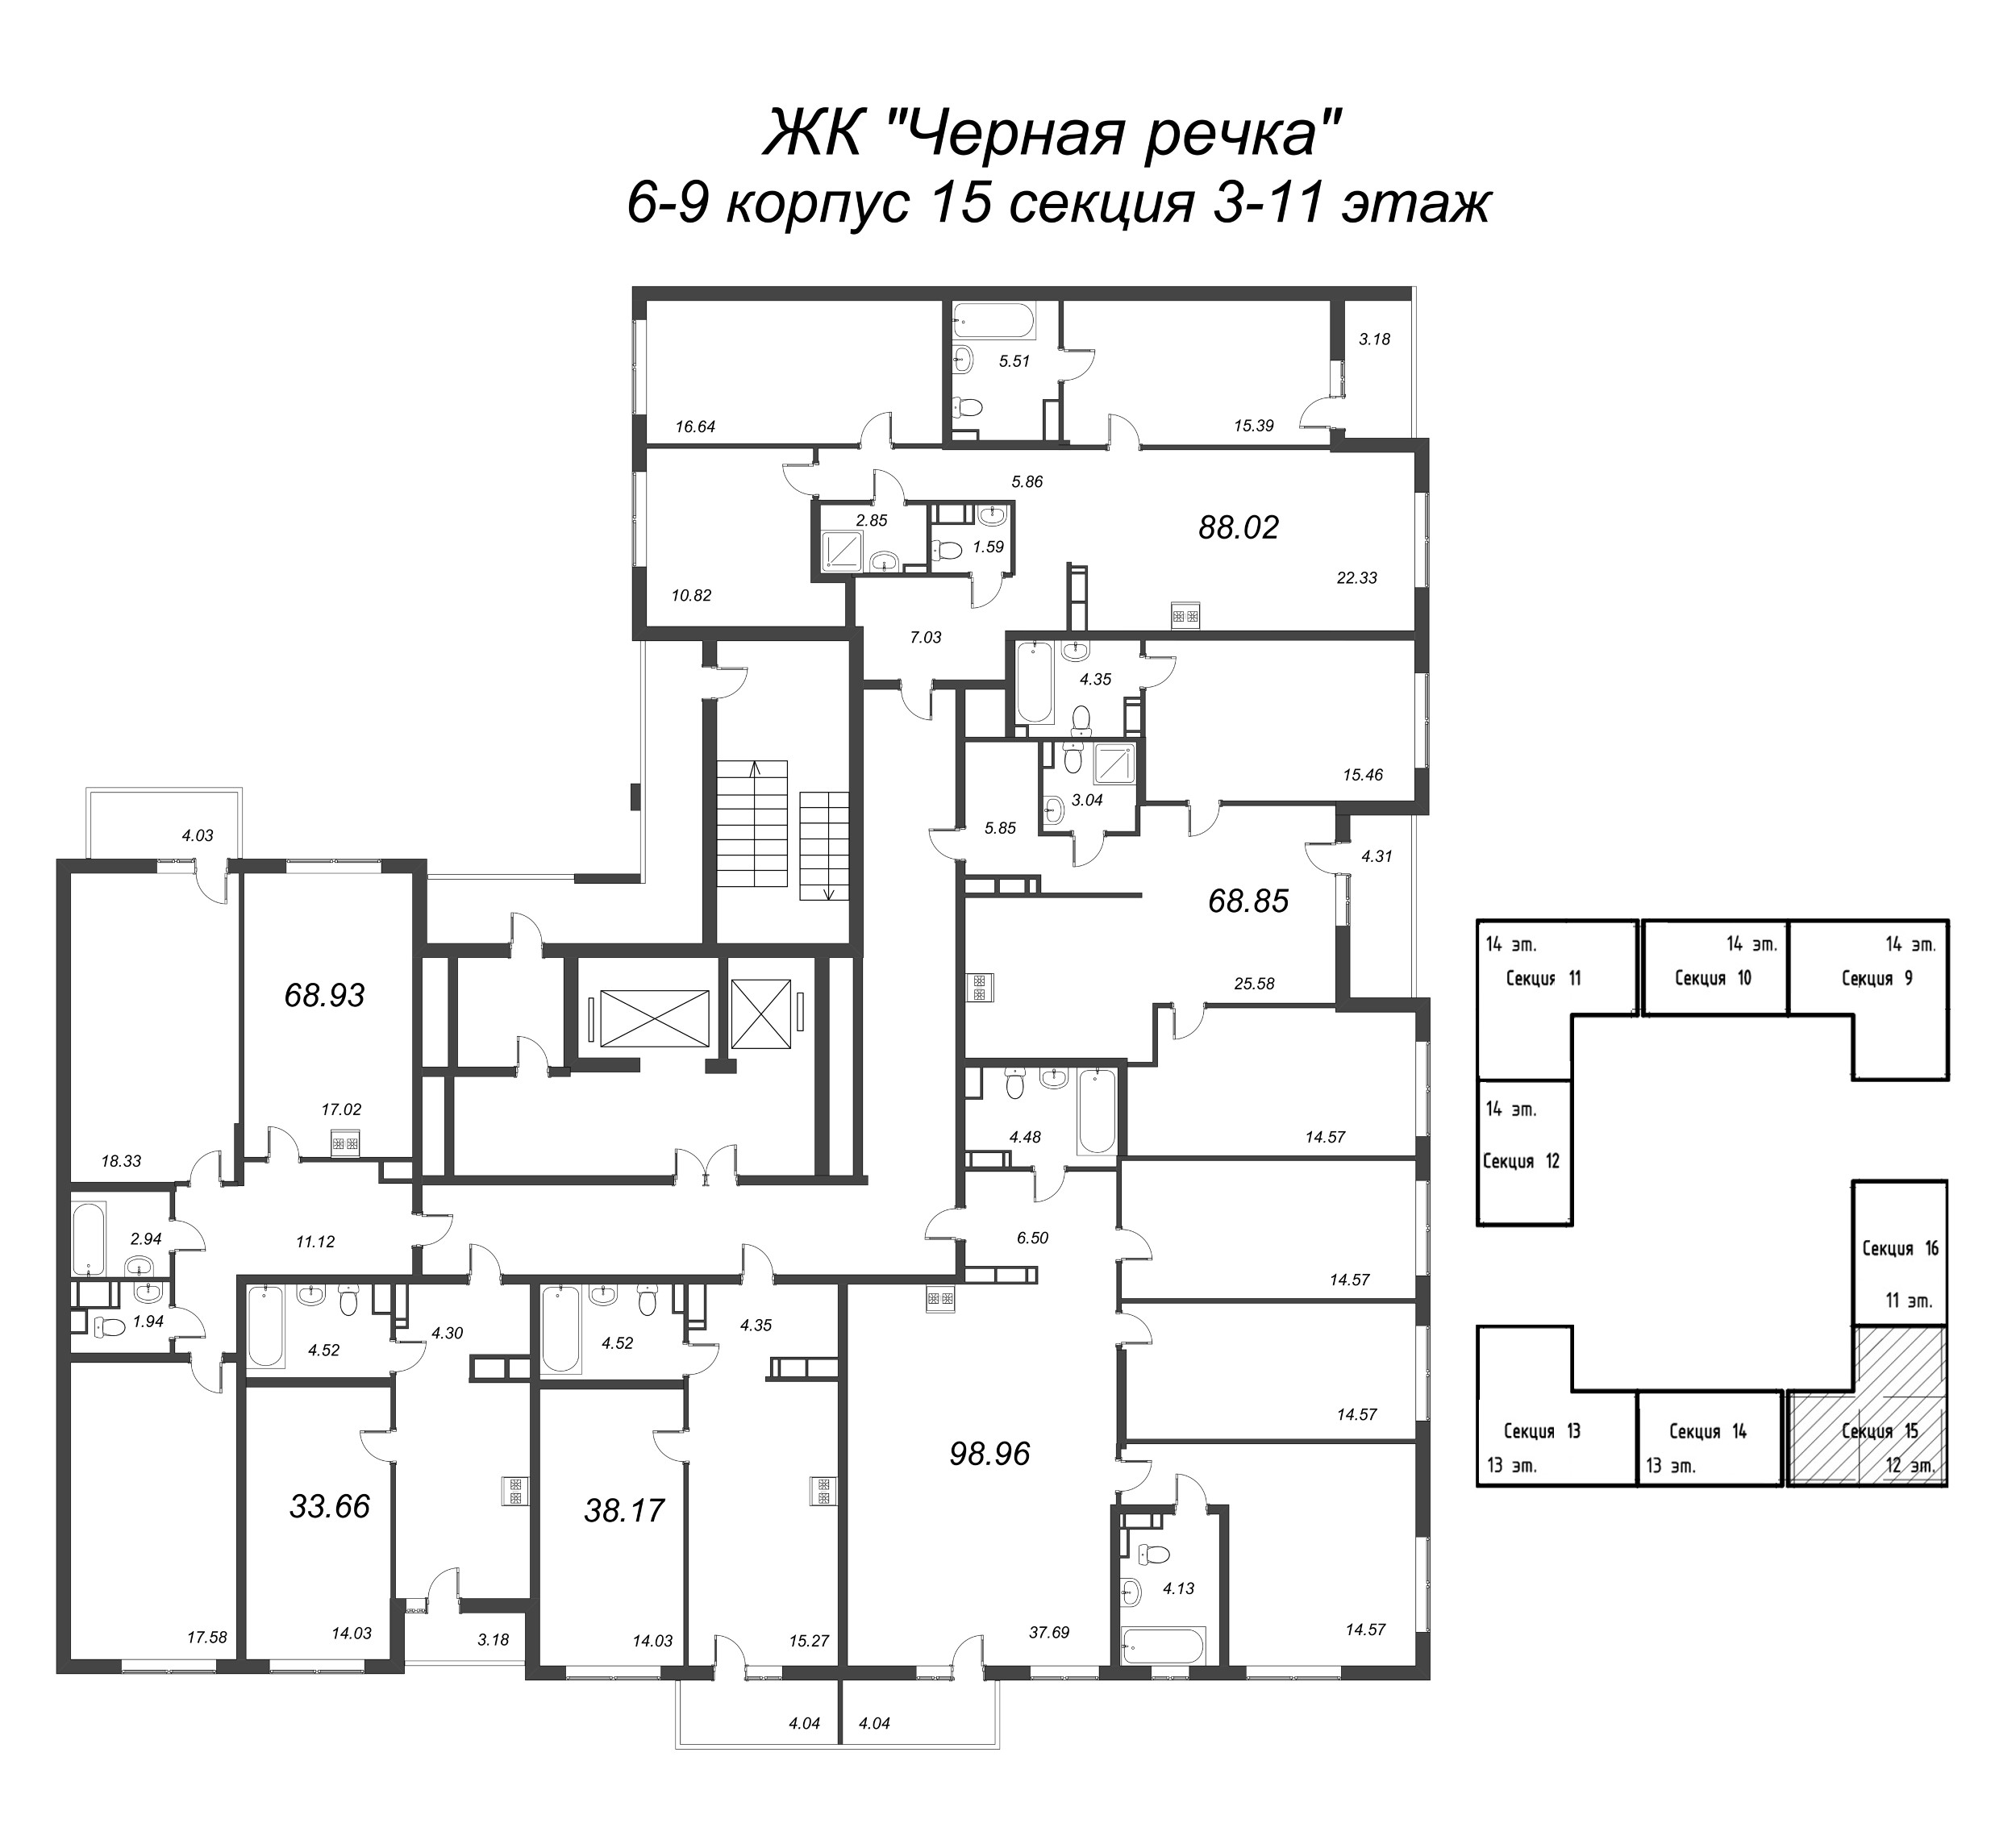 4-комнатная (Евро) квартира, 85.42 м² - планировка этажа